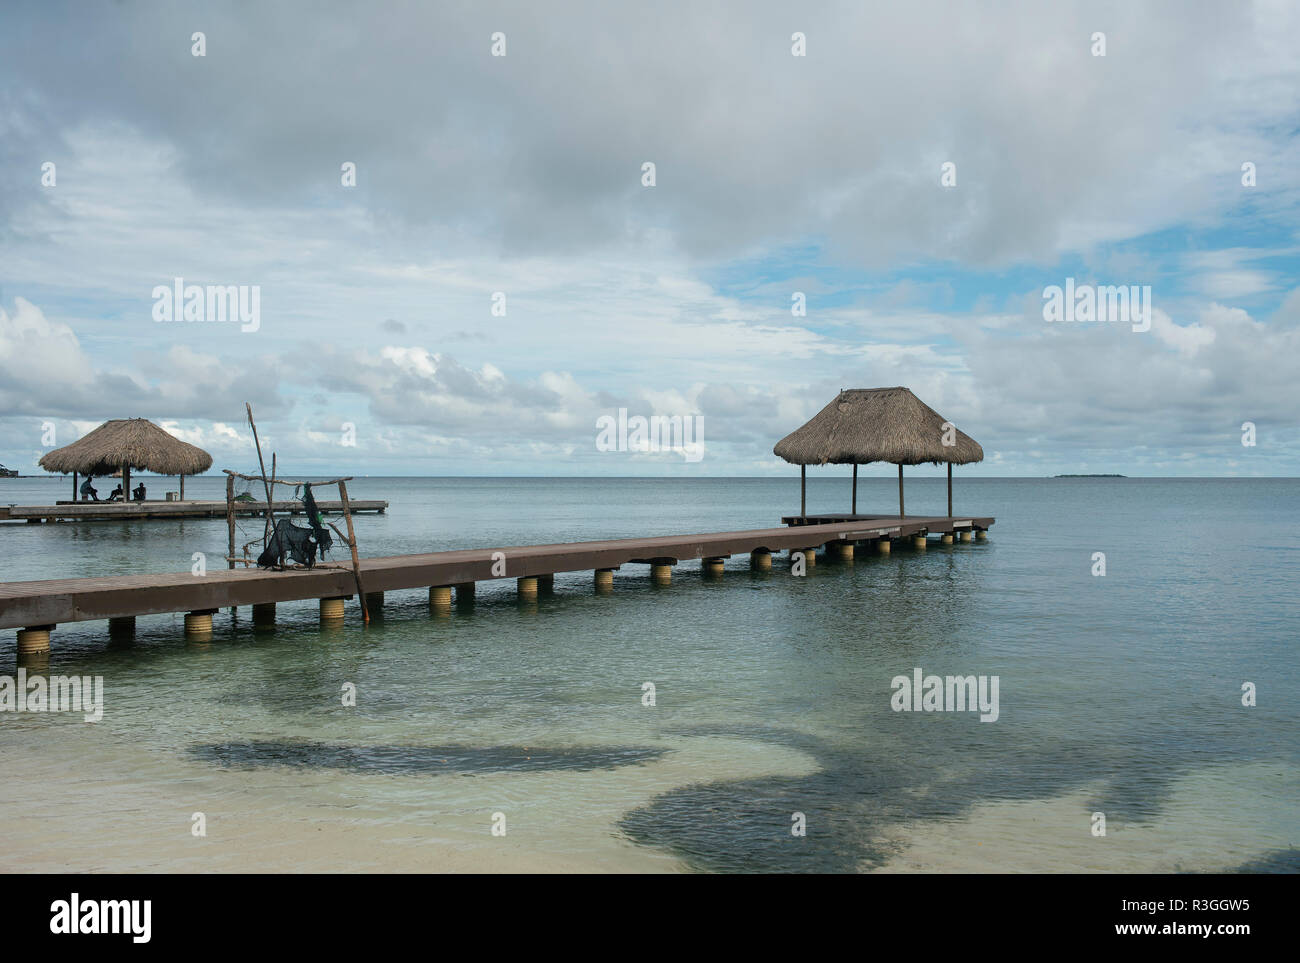 Docks mit Cabana (Strand Pavillons). Einfache seascape Schuß von Isla Grande, Rosario Inseln. Cartagena de Indias, Kolumbien. Okt 2018 Stockfoto